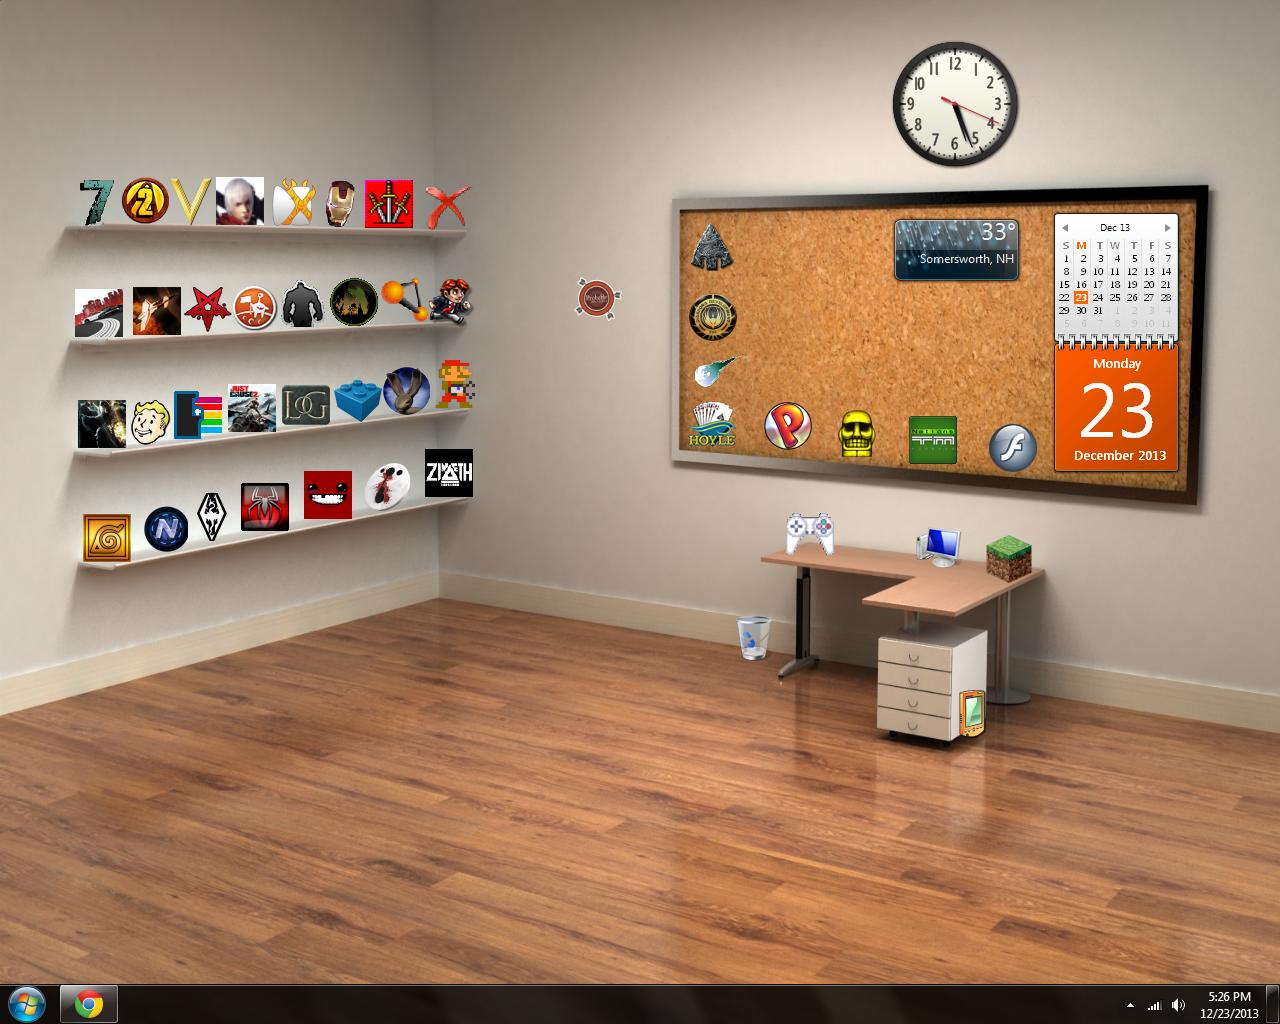 Download 500 Office desktop wallpaper background for free